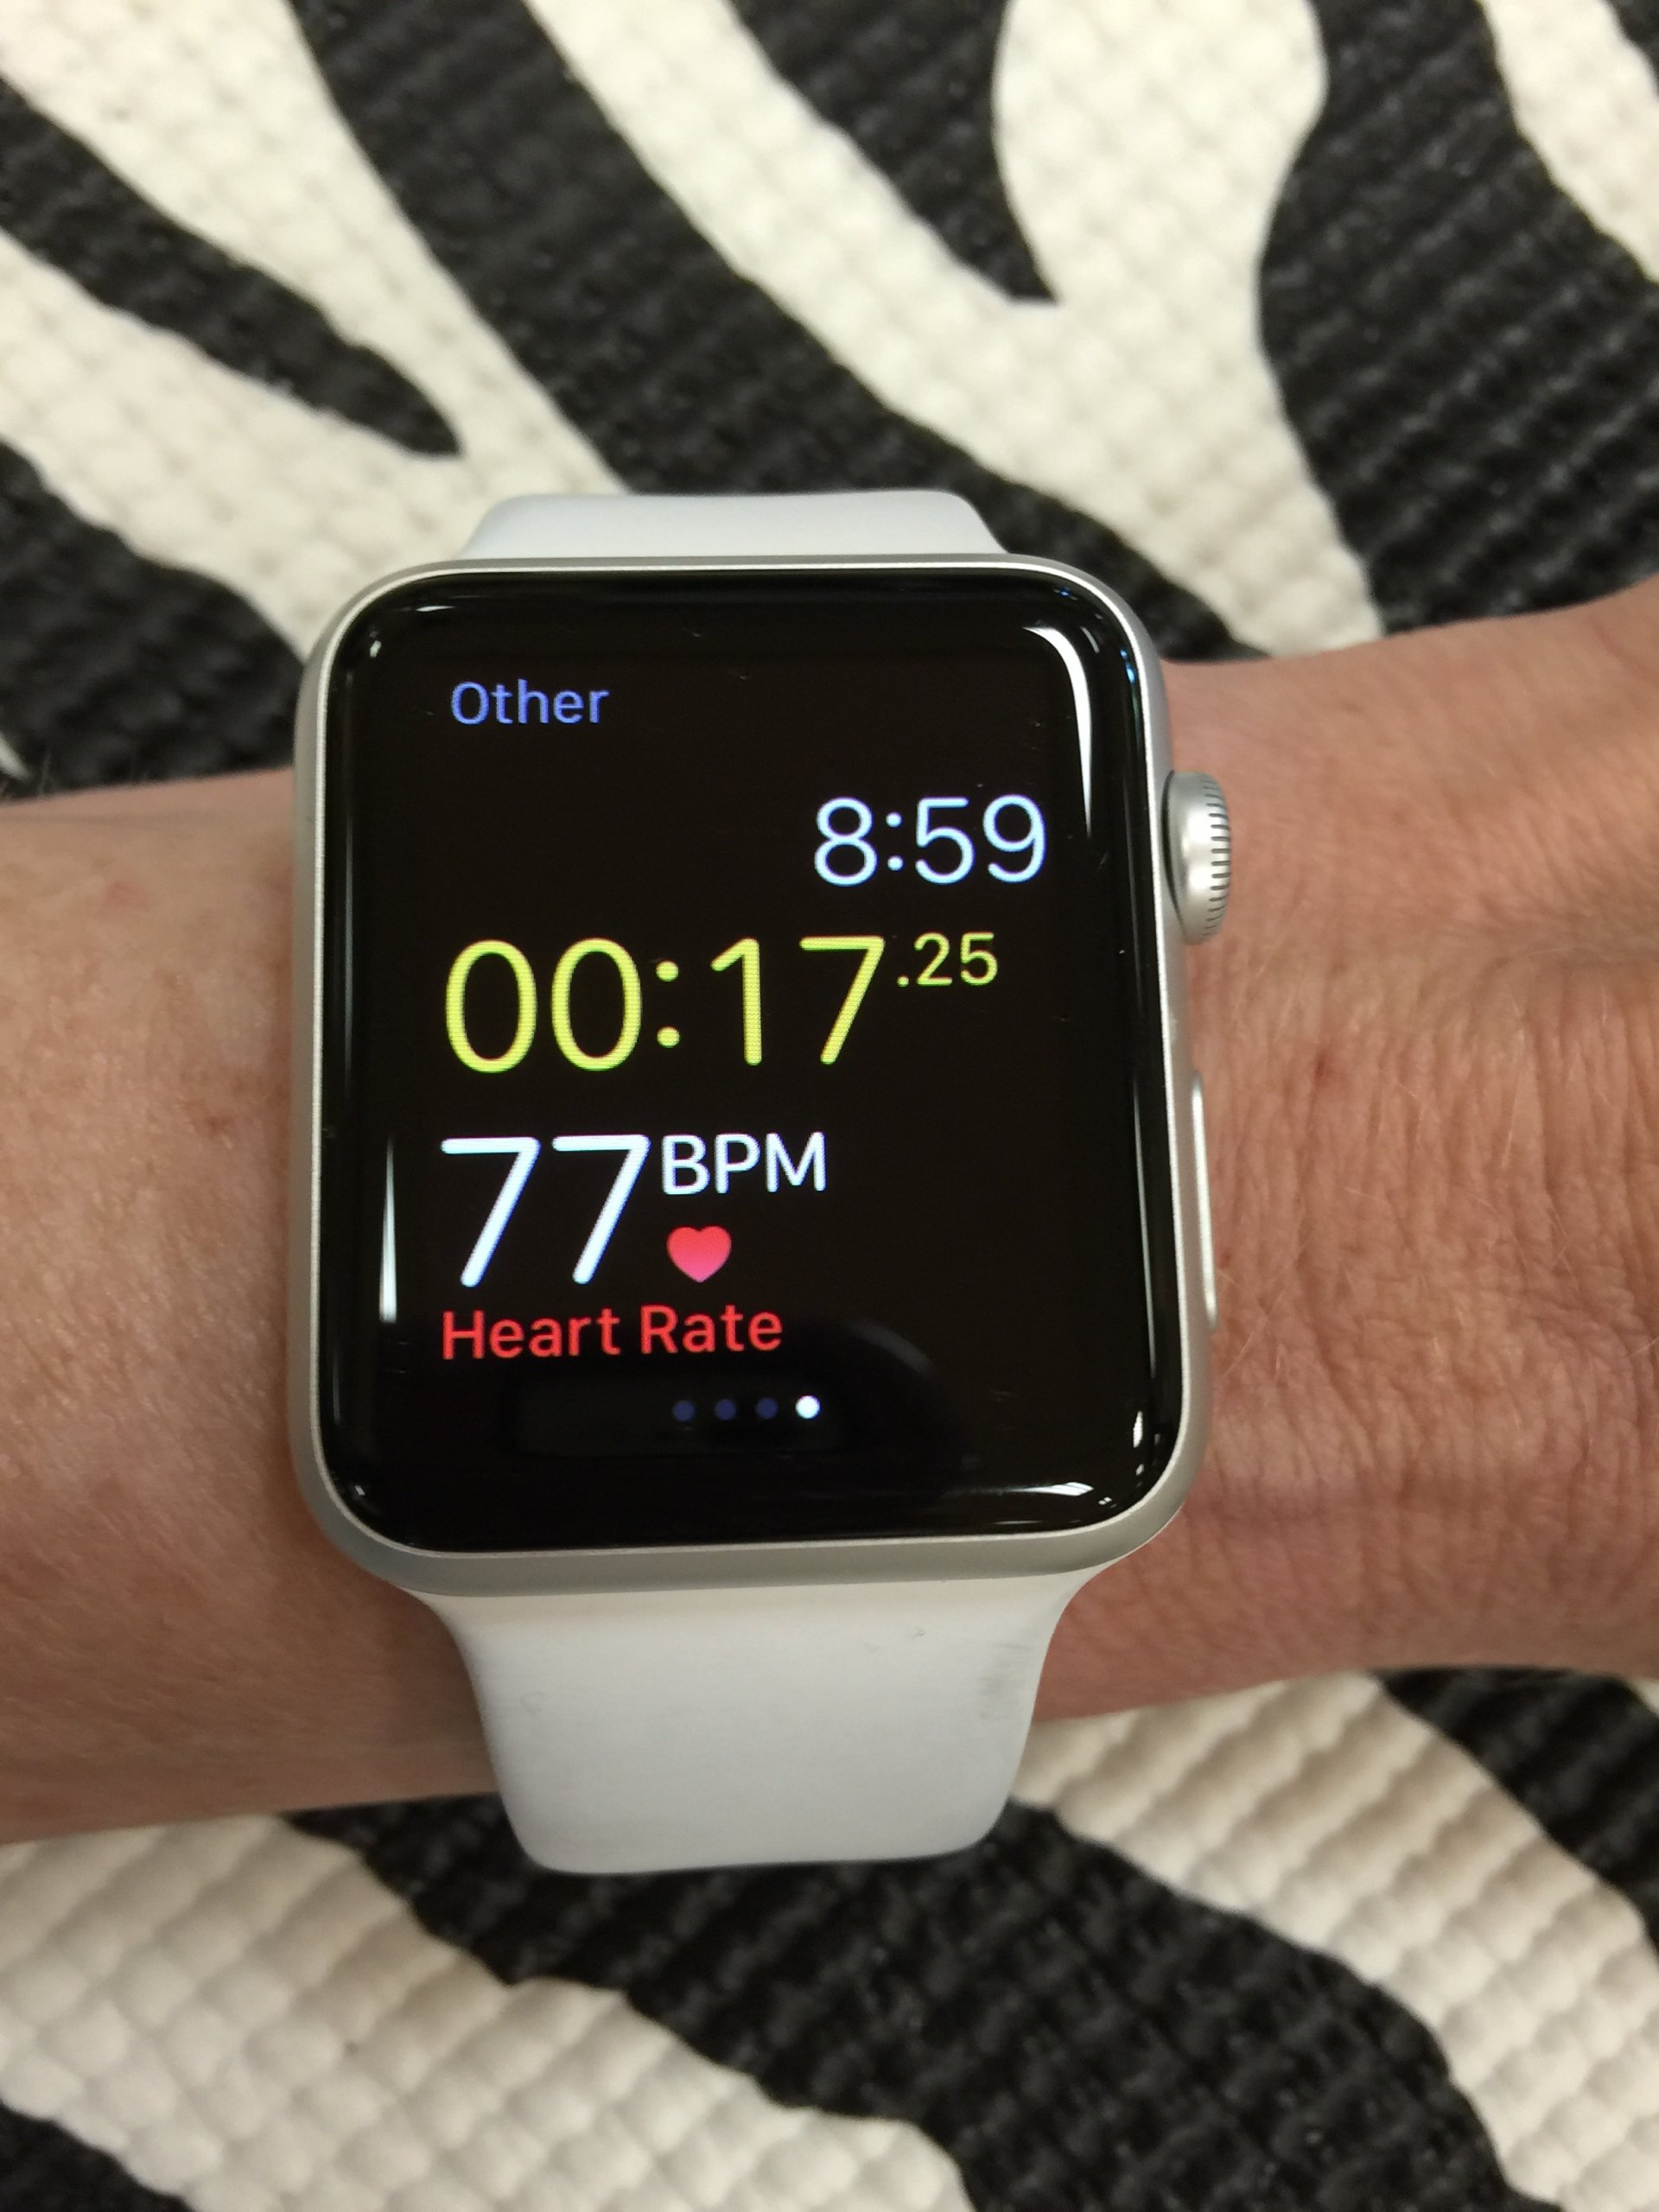 Can Apple Watch measure blood pressure? Here